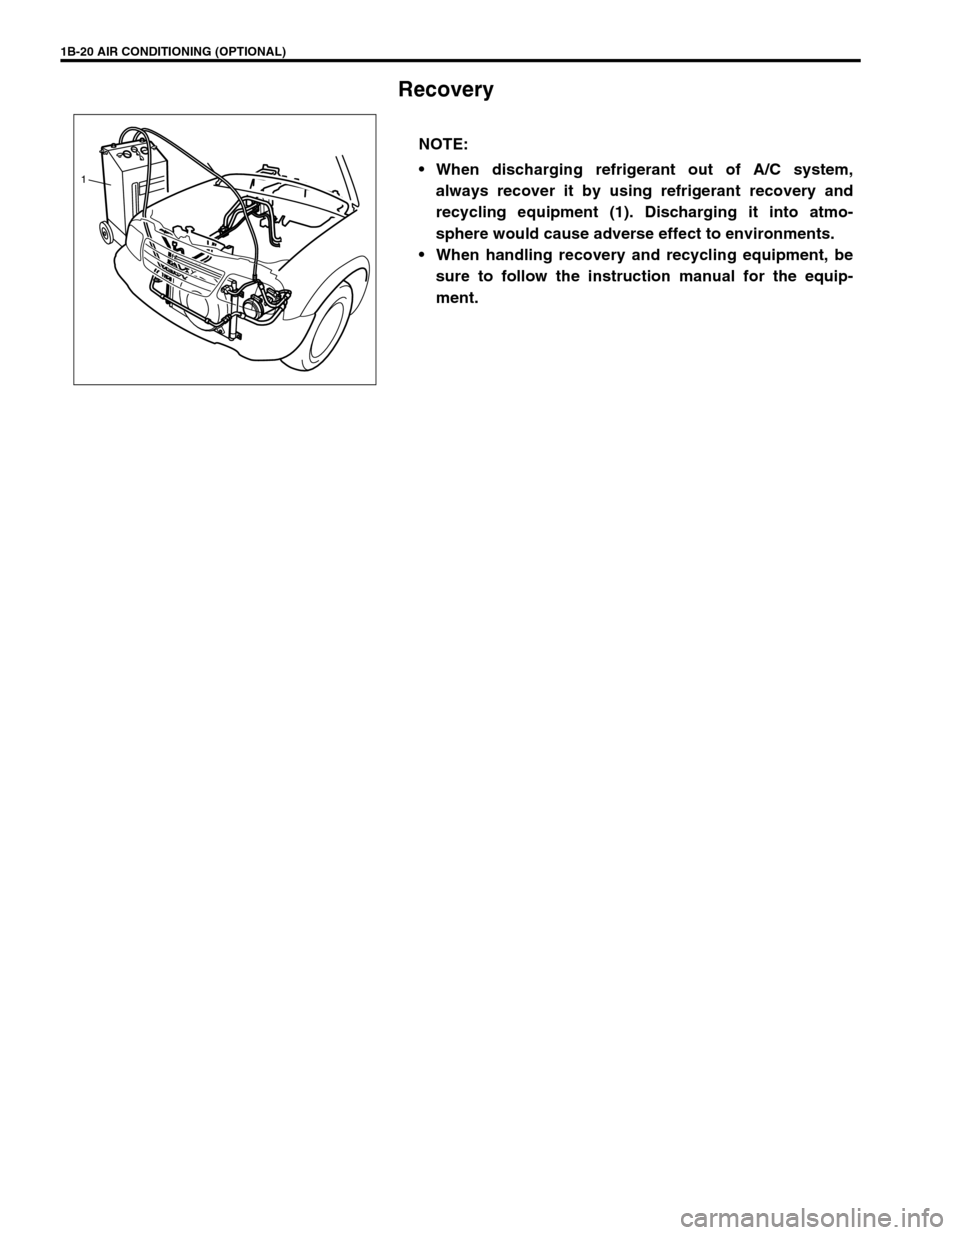 SUZUKI GRAND VITARA 2001 2.G Owners Manual 1B-20 AIR CONDITIONING (OPTIONAL)
Recovery
NOTE:
When discharging refrigerant out of A/C system,
always recover it by using refrigerant recovery and
recycling equipment (1). Discharging it into atmo-